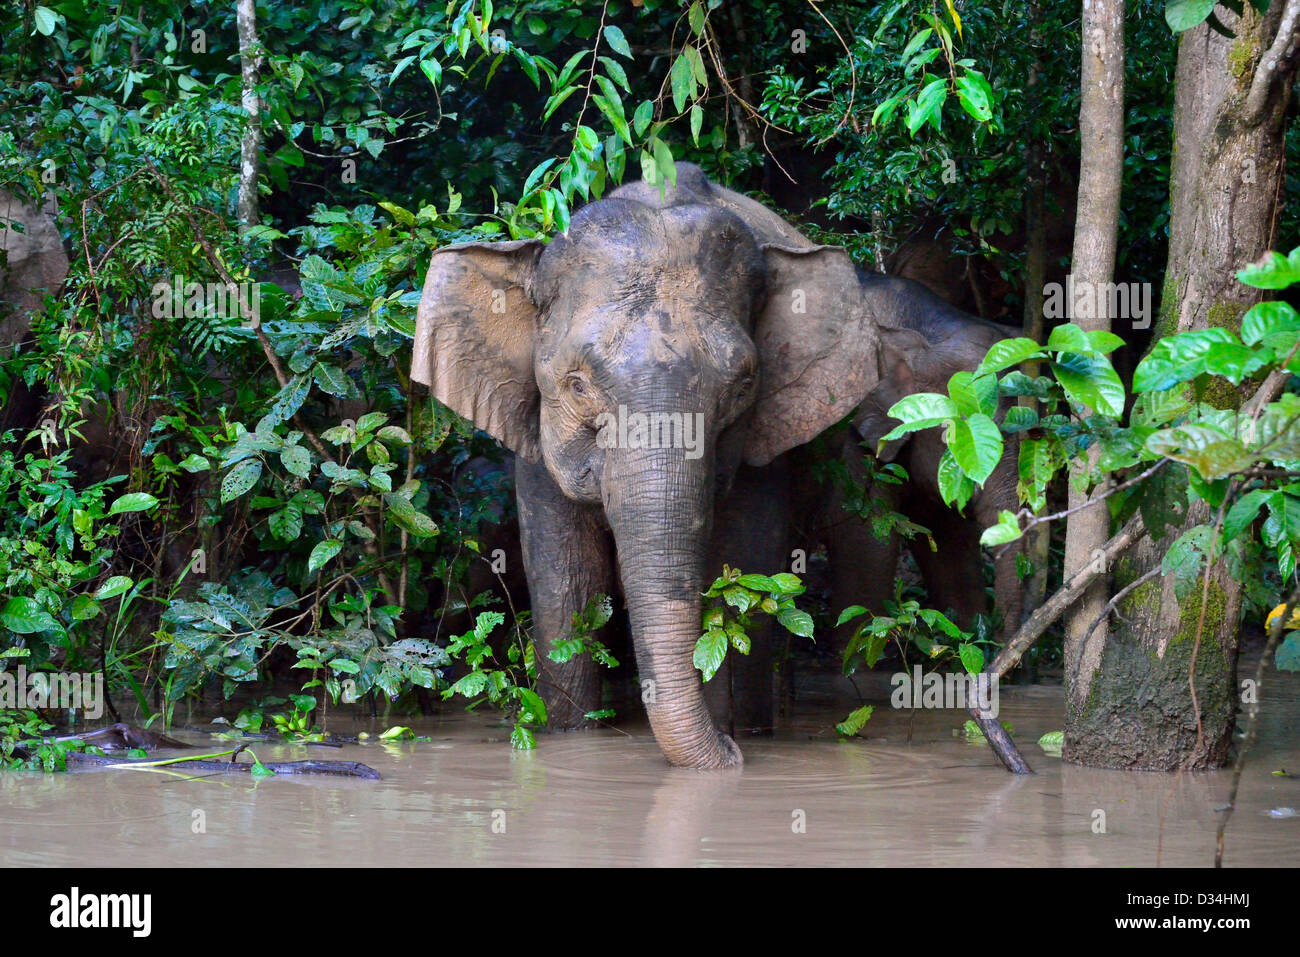 Pygmy elephants playing near Kinabatangan River. Sabah, Borneo, Malaysia. Stock Photo